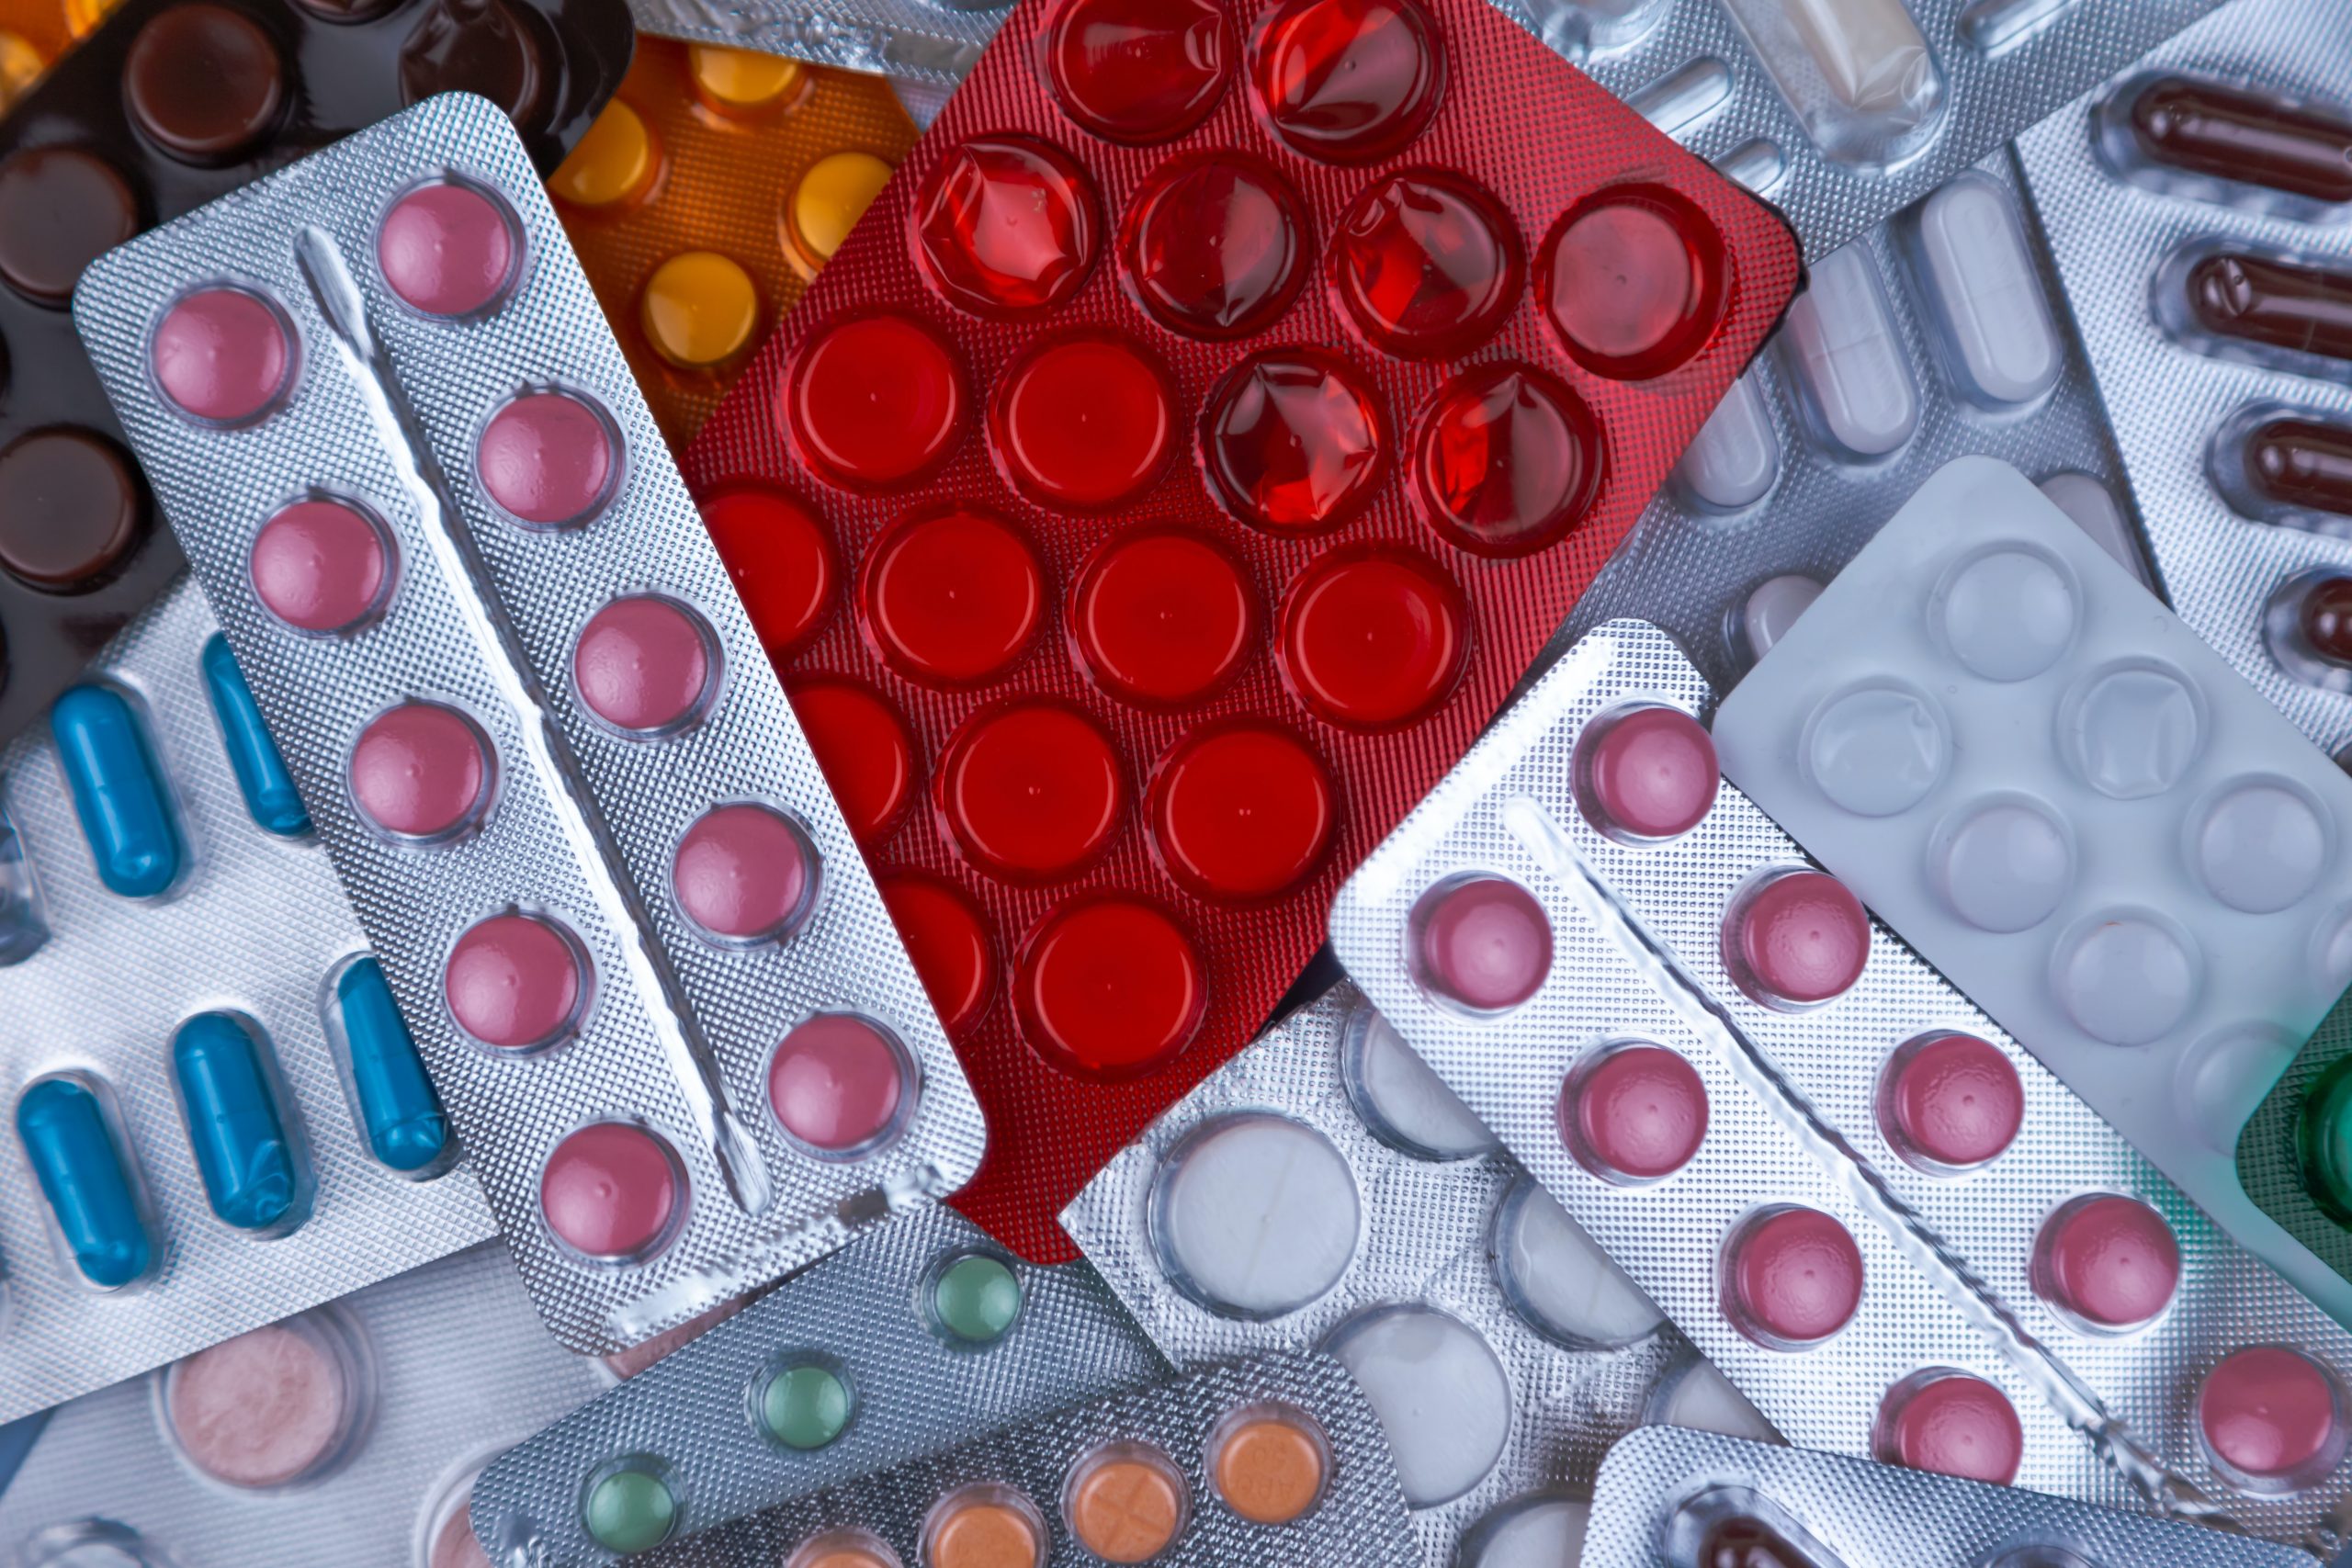 Blister packs of medicines